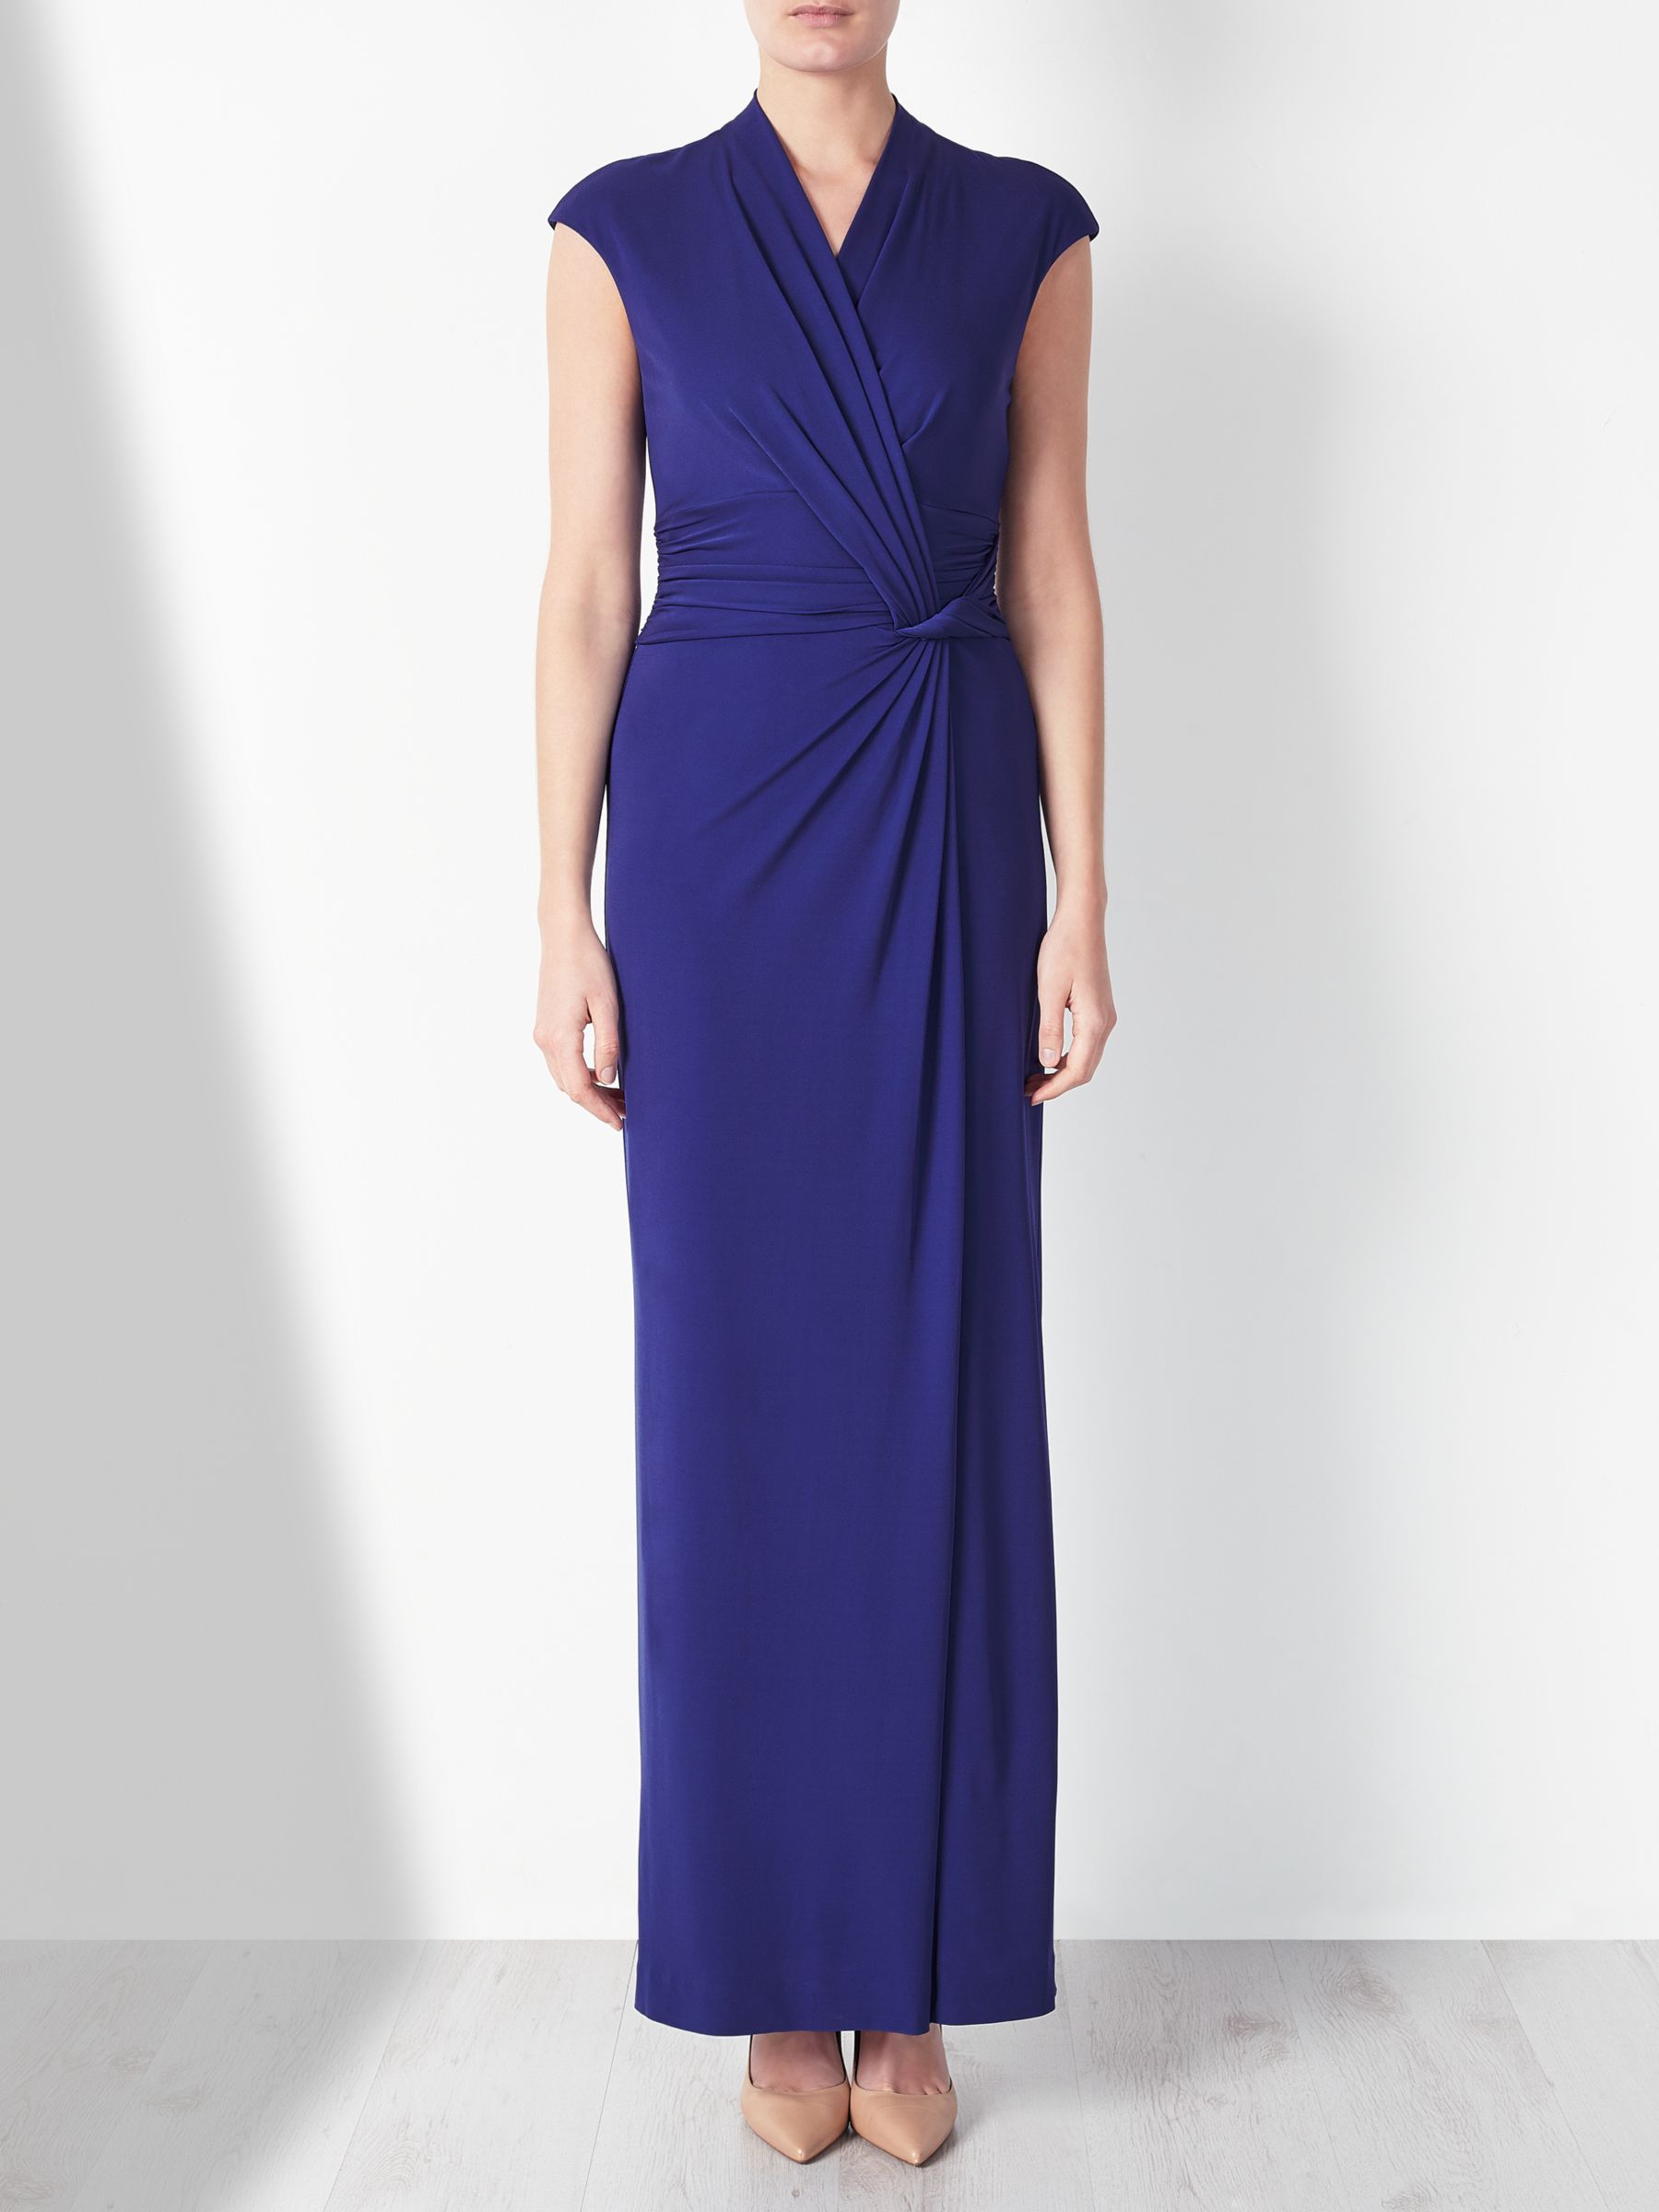 John Lewis & Partners Draped Twist Waist Dress, Blue, 8